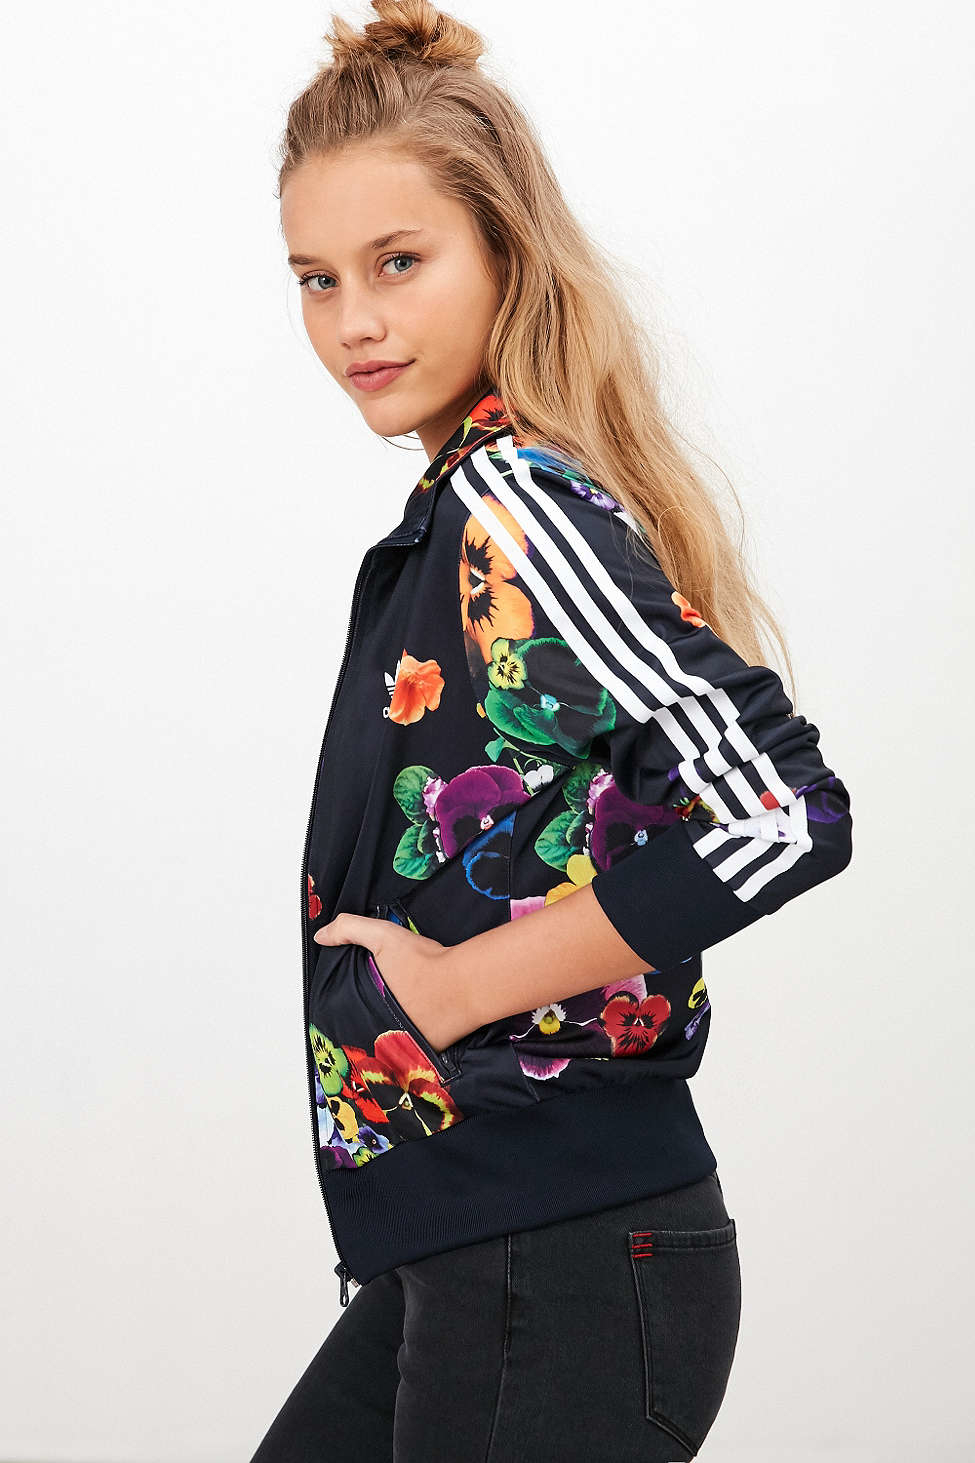 adidas firebird floral jacket